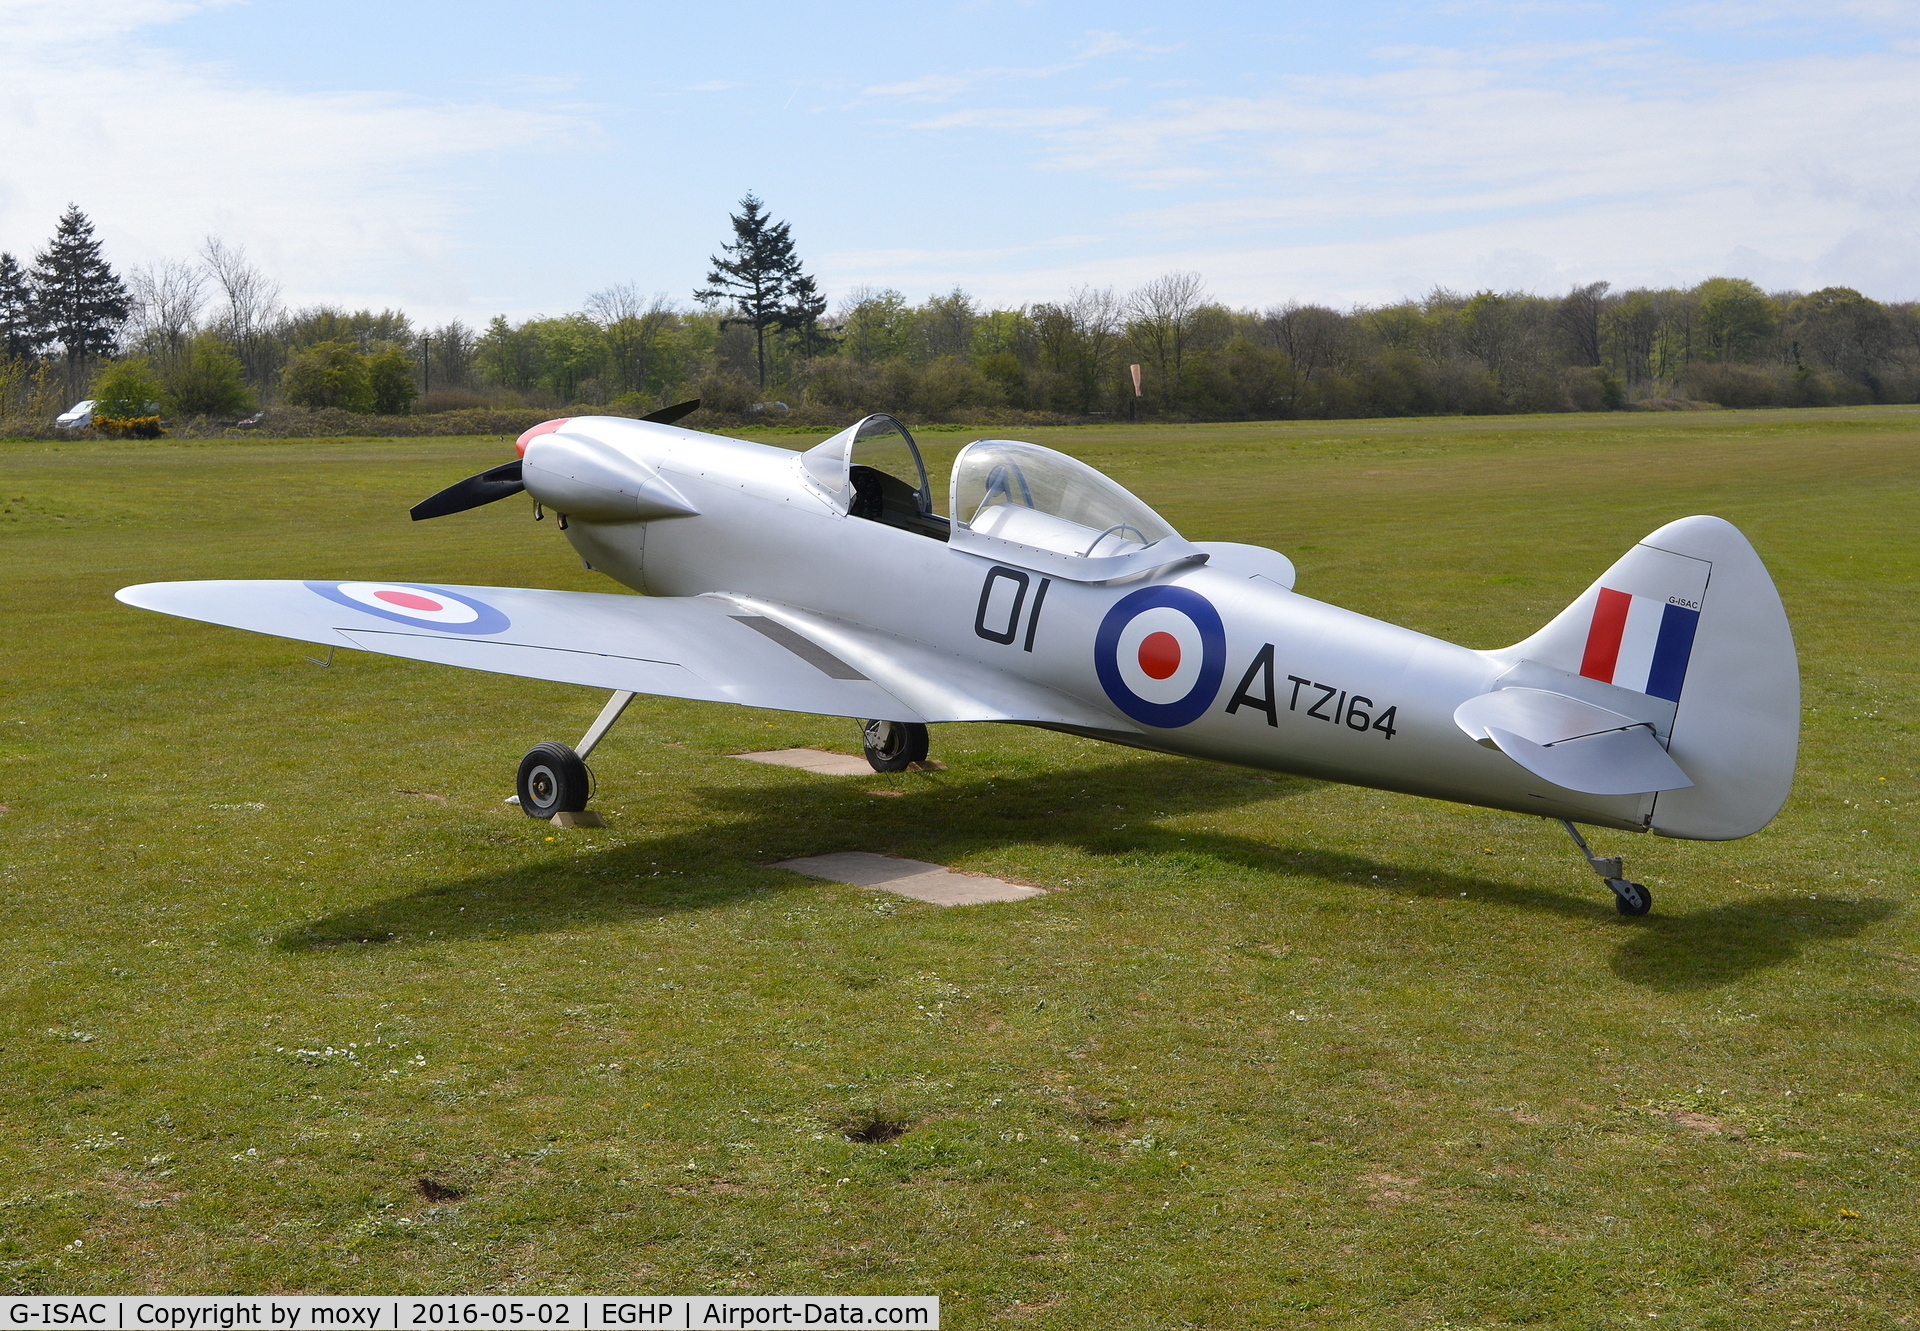 G-ISAC, 2015 Isaacs Spitfire C/N LAA 027-15134, Isaacs Spitfire at Popham.